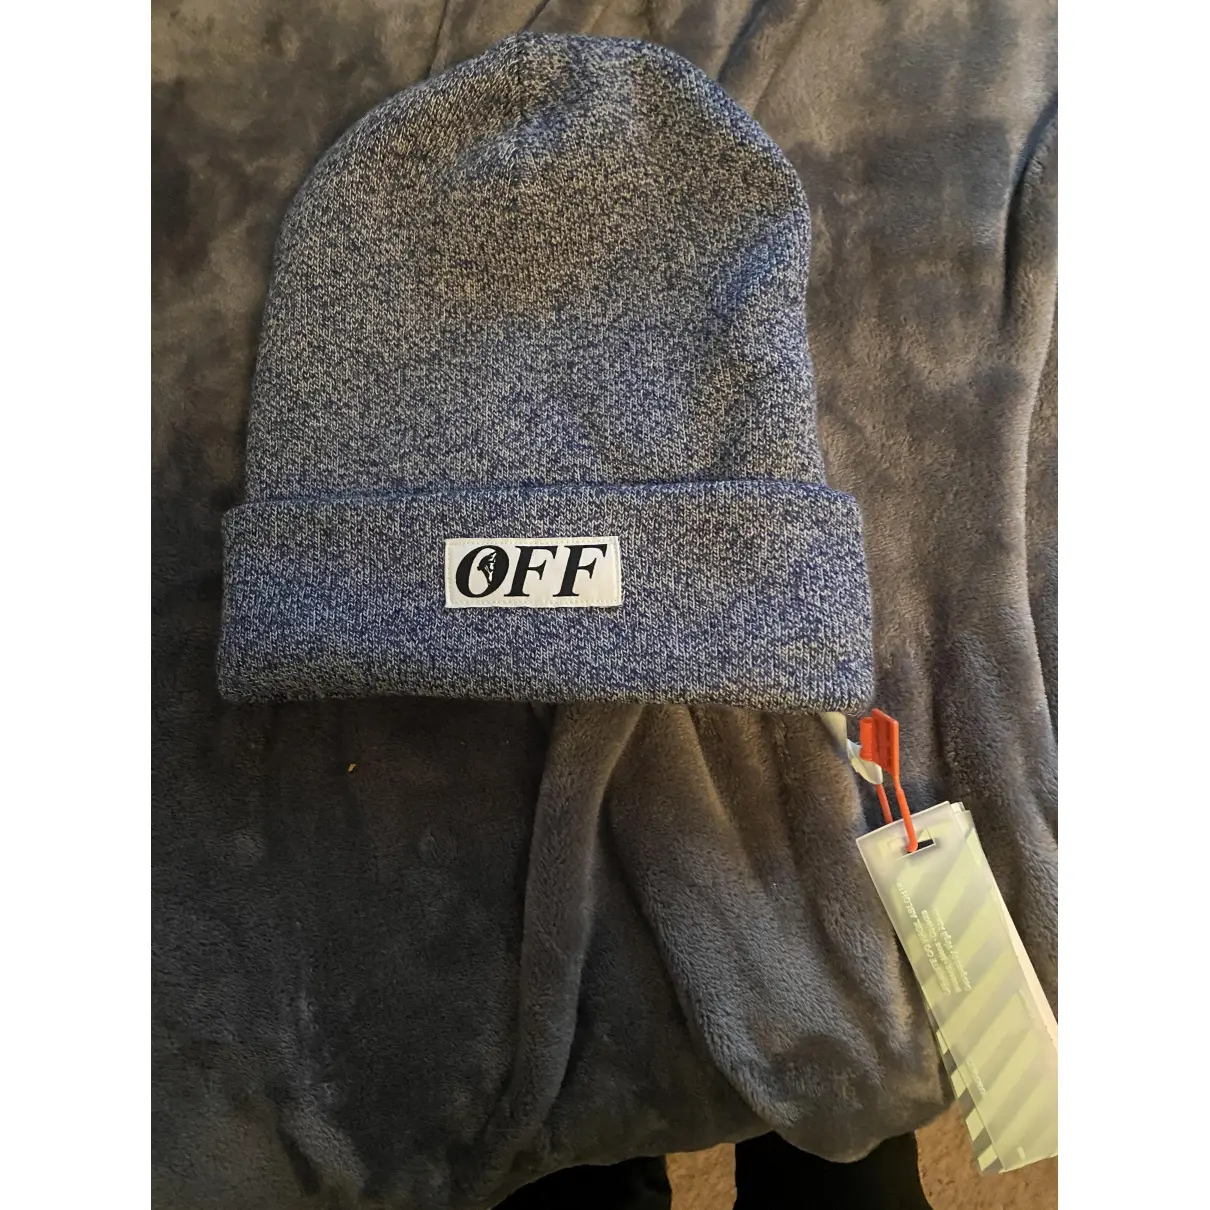 Buy Off-White Wool hat online